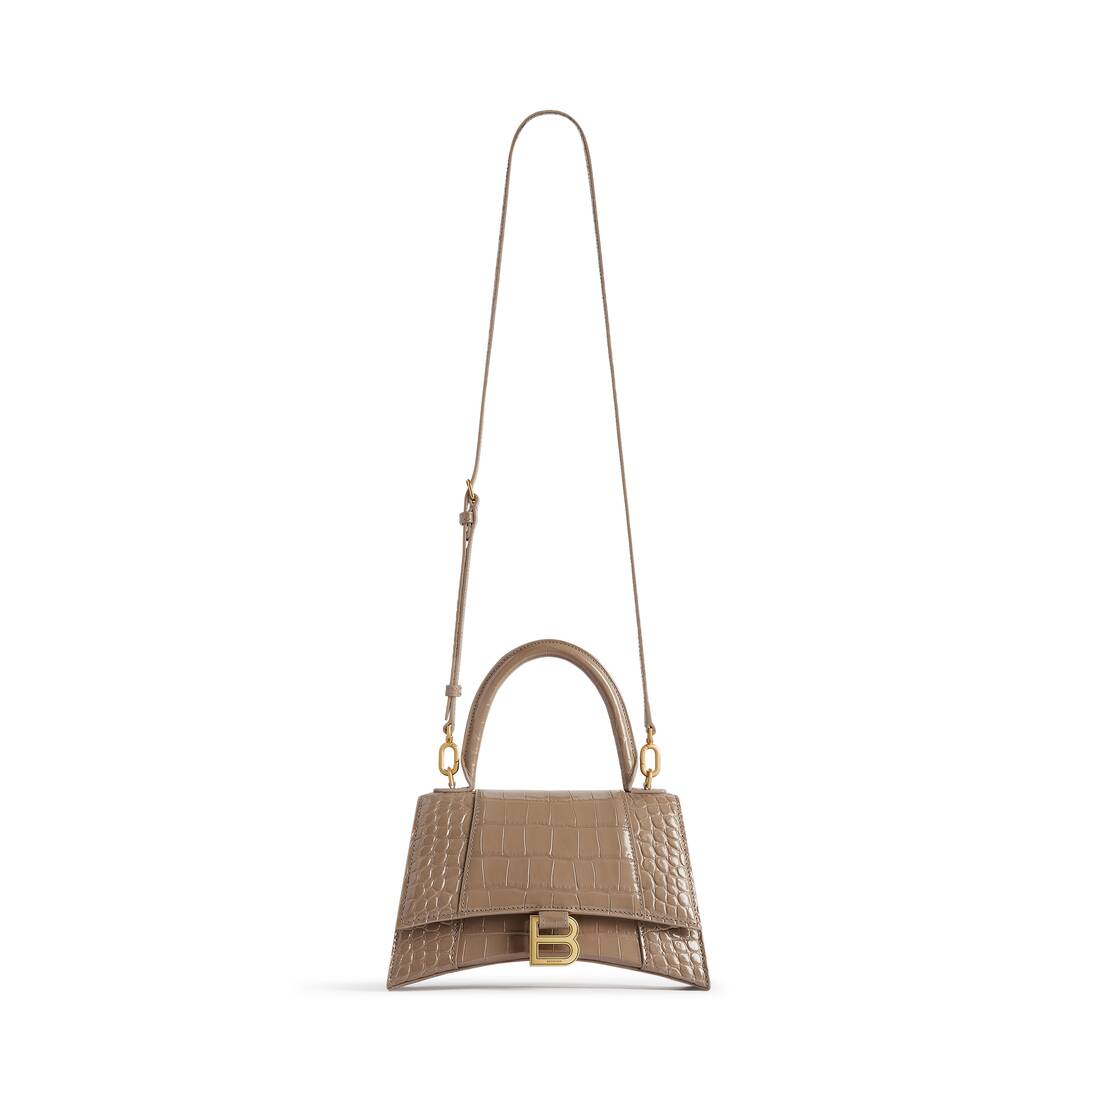 Balenciaga Small Hourglass Top Handle Bag in Brown